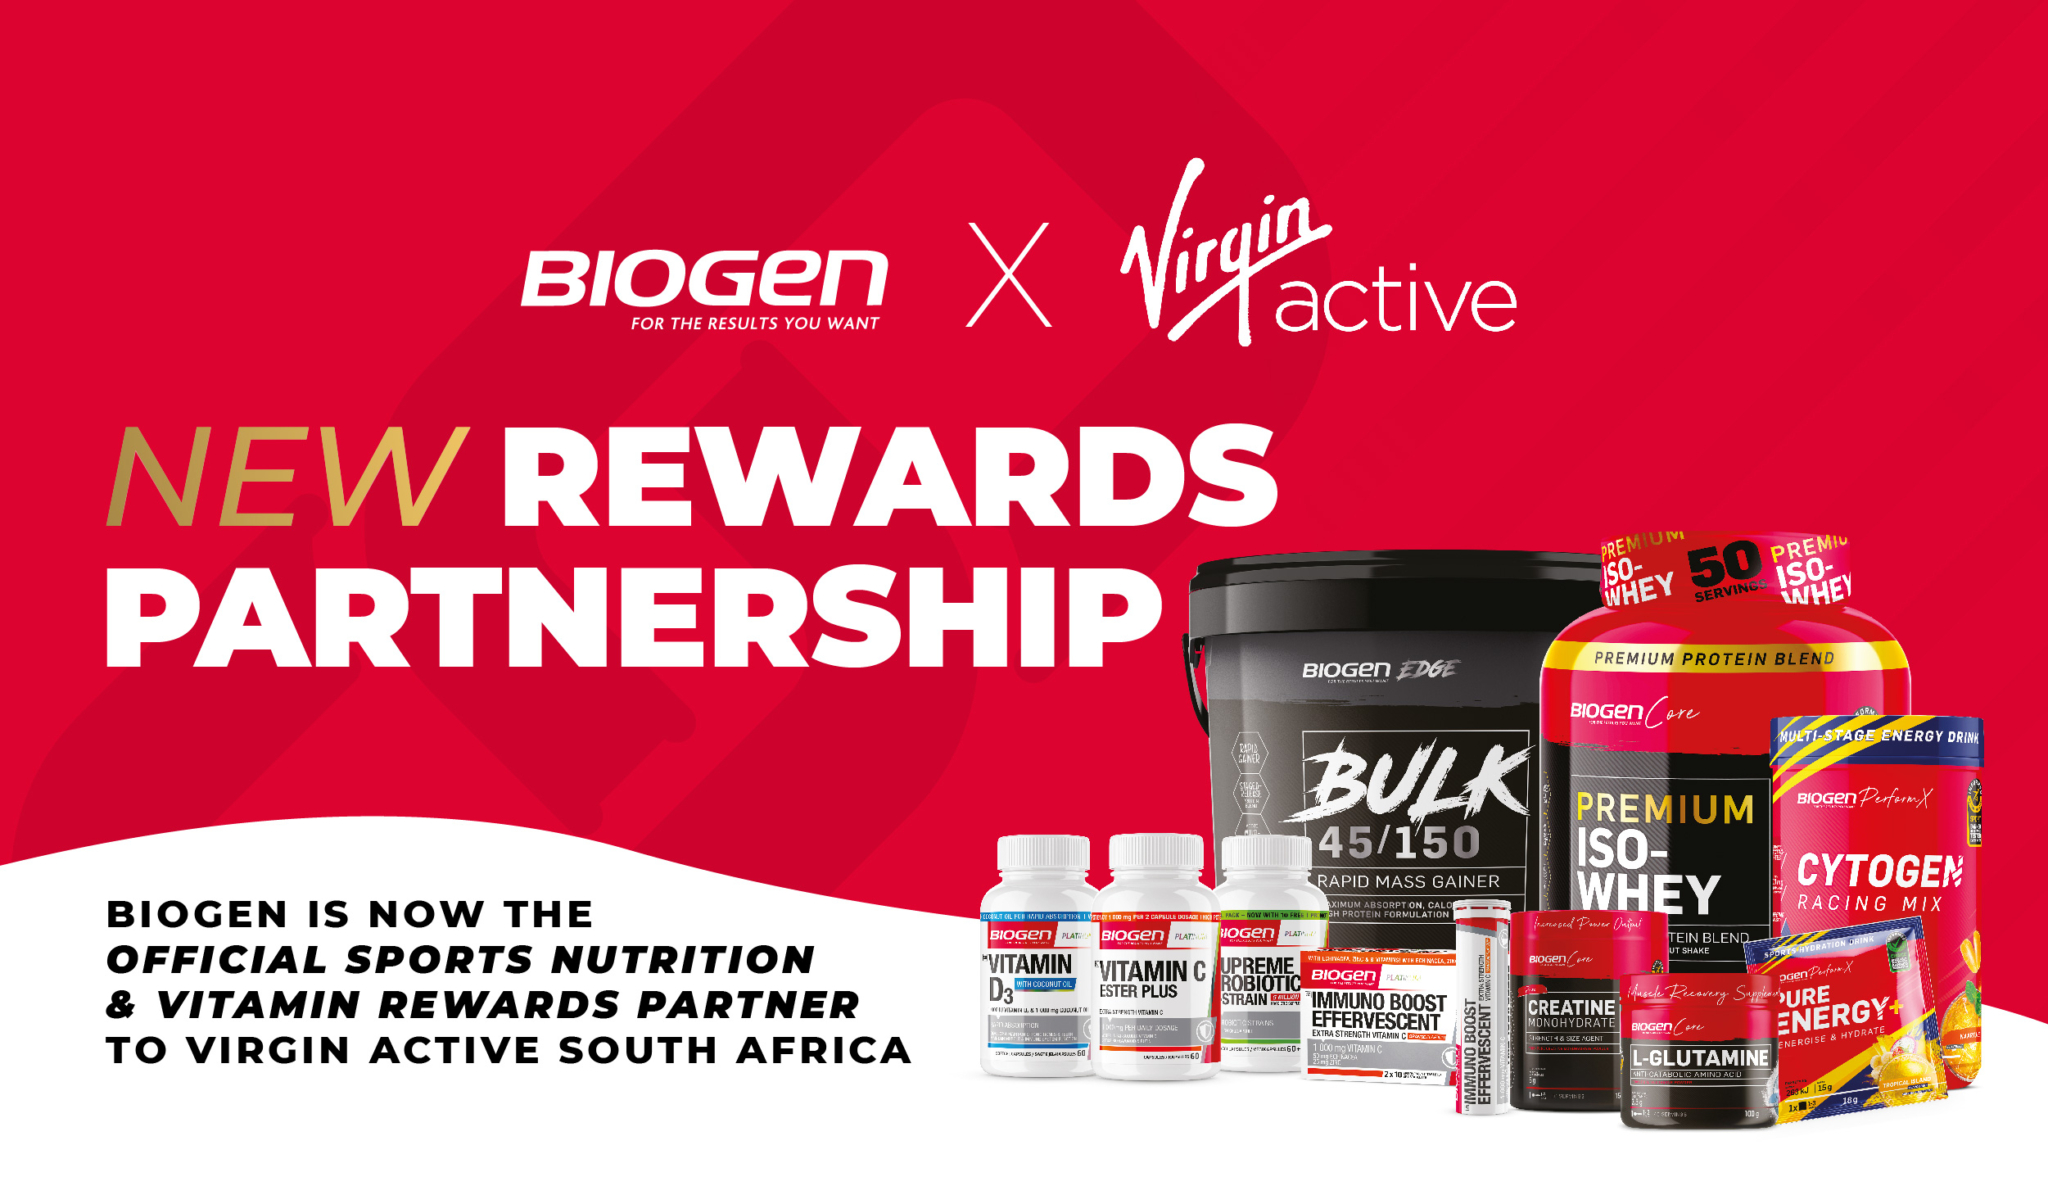 Biogen x Virgin Active partnership Emarsys Banners 1200x700px 2 scaled | Biogen SA | Press Release: Virgin Active partners with Biogen to reward members for active living